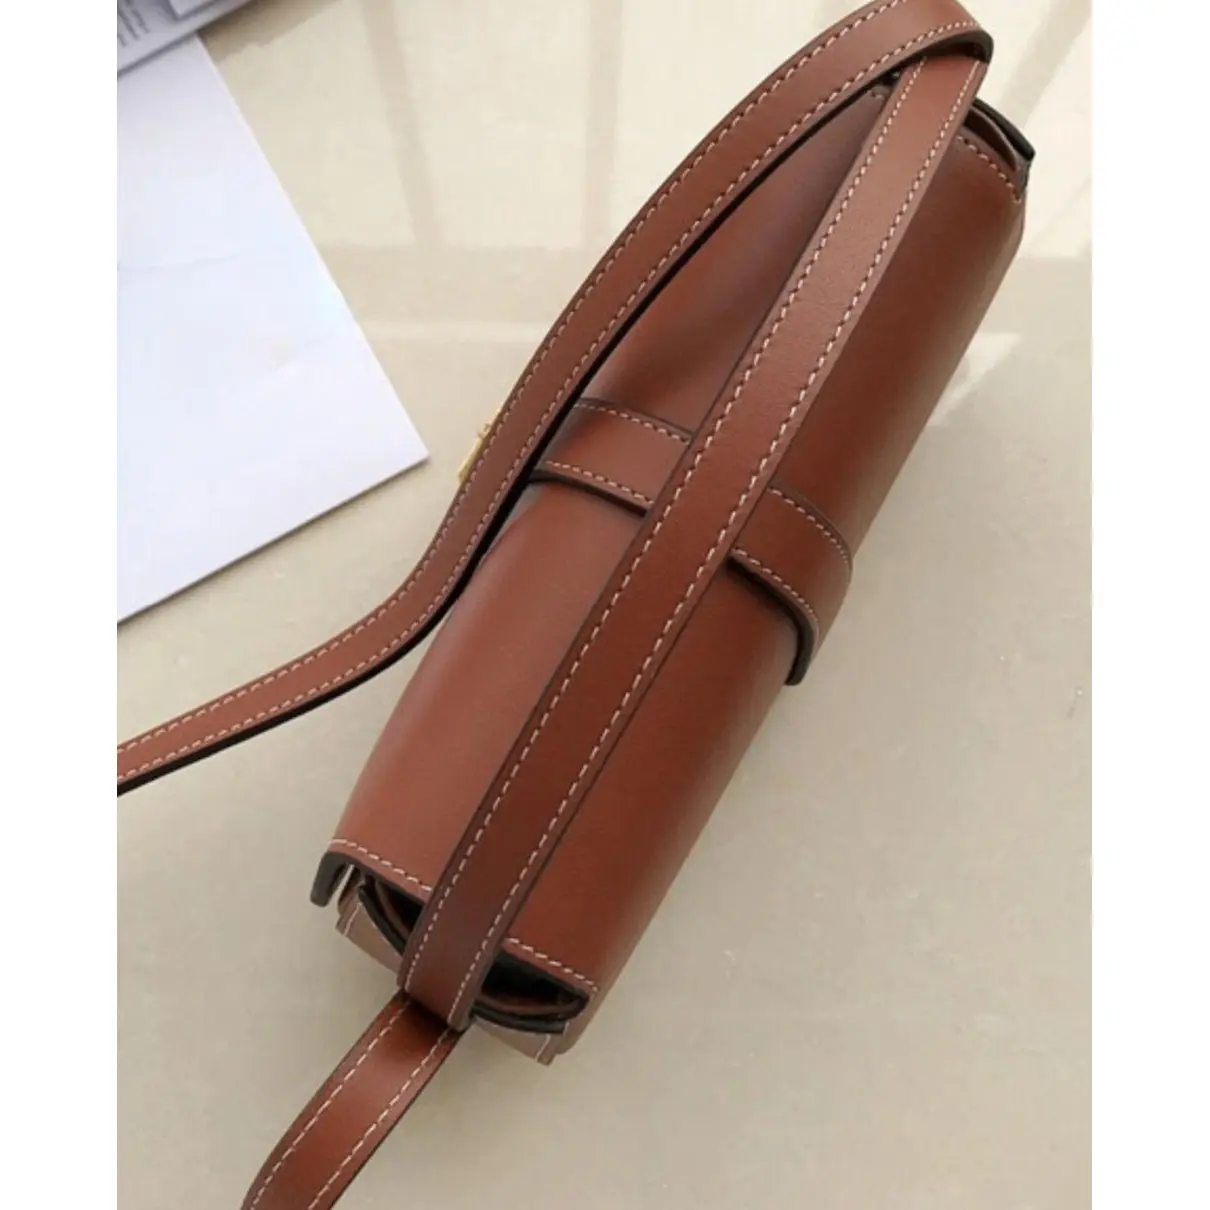 Buy Celine Triomphe leather handbag online